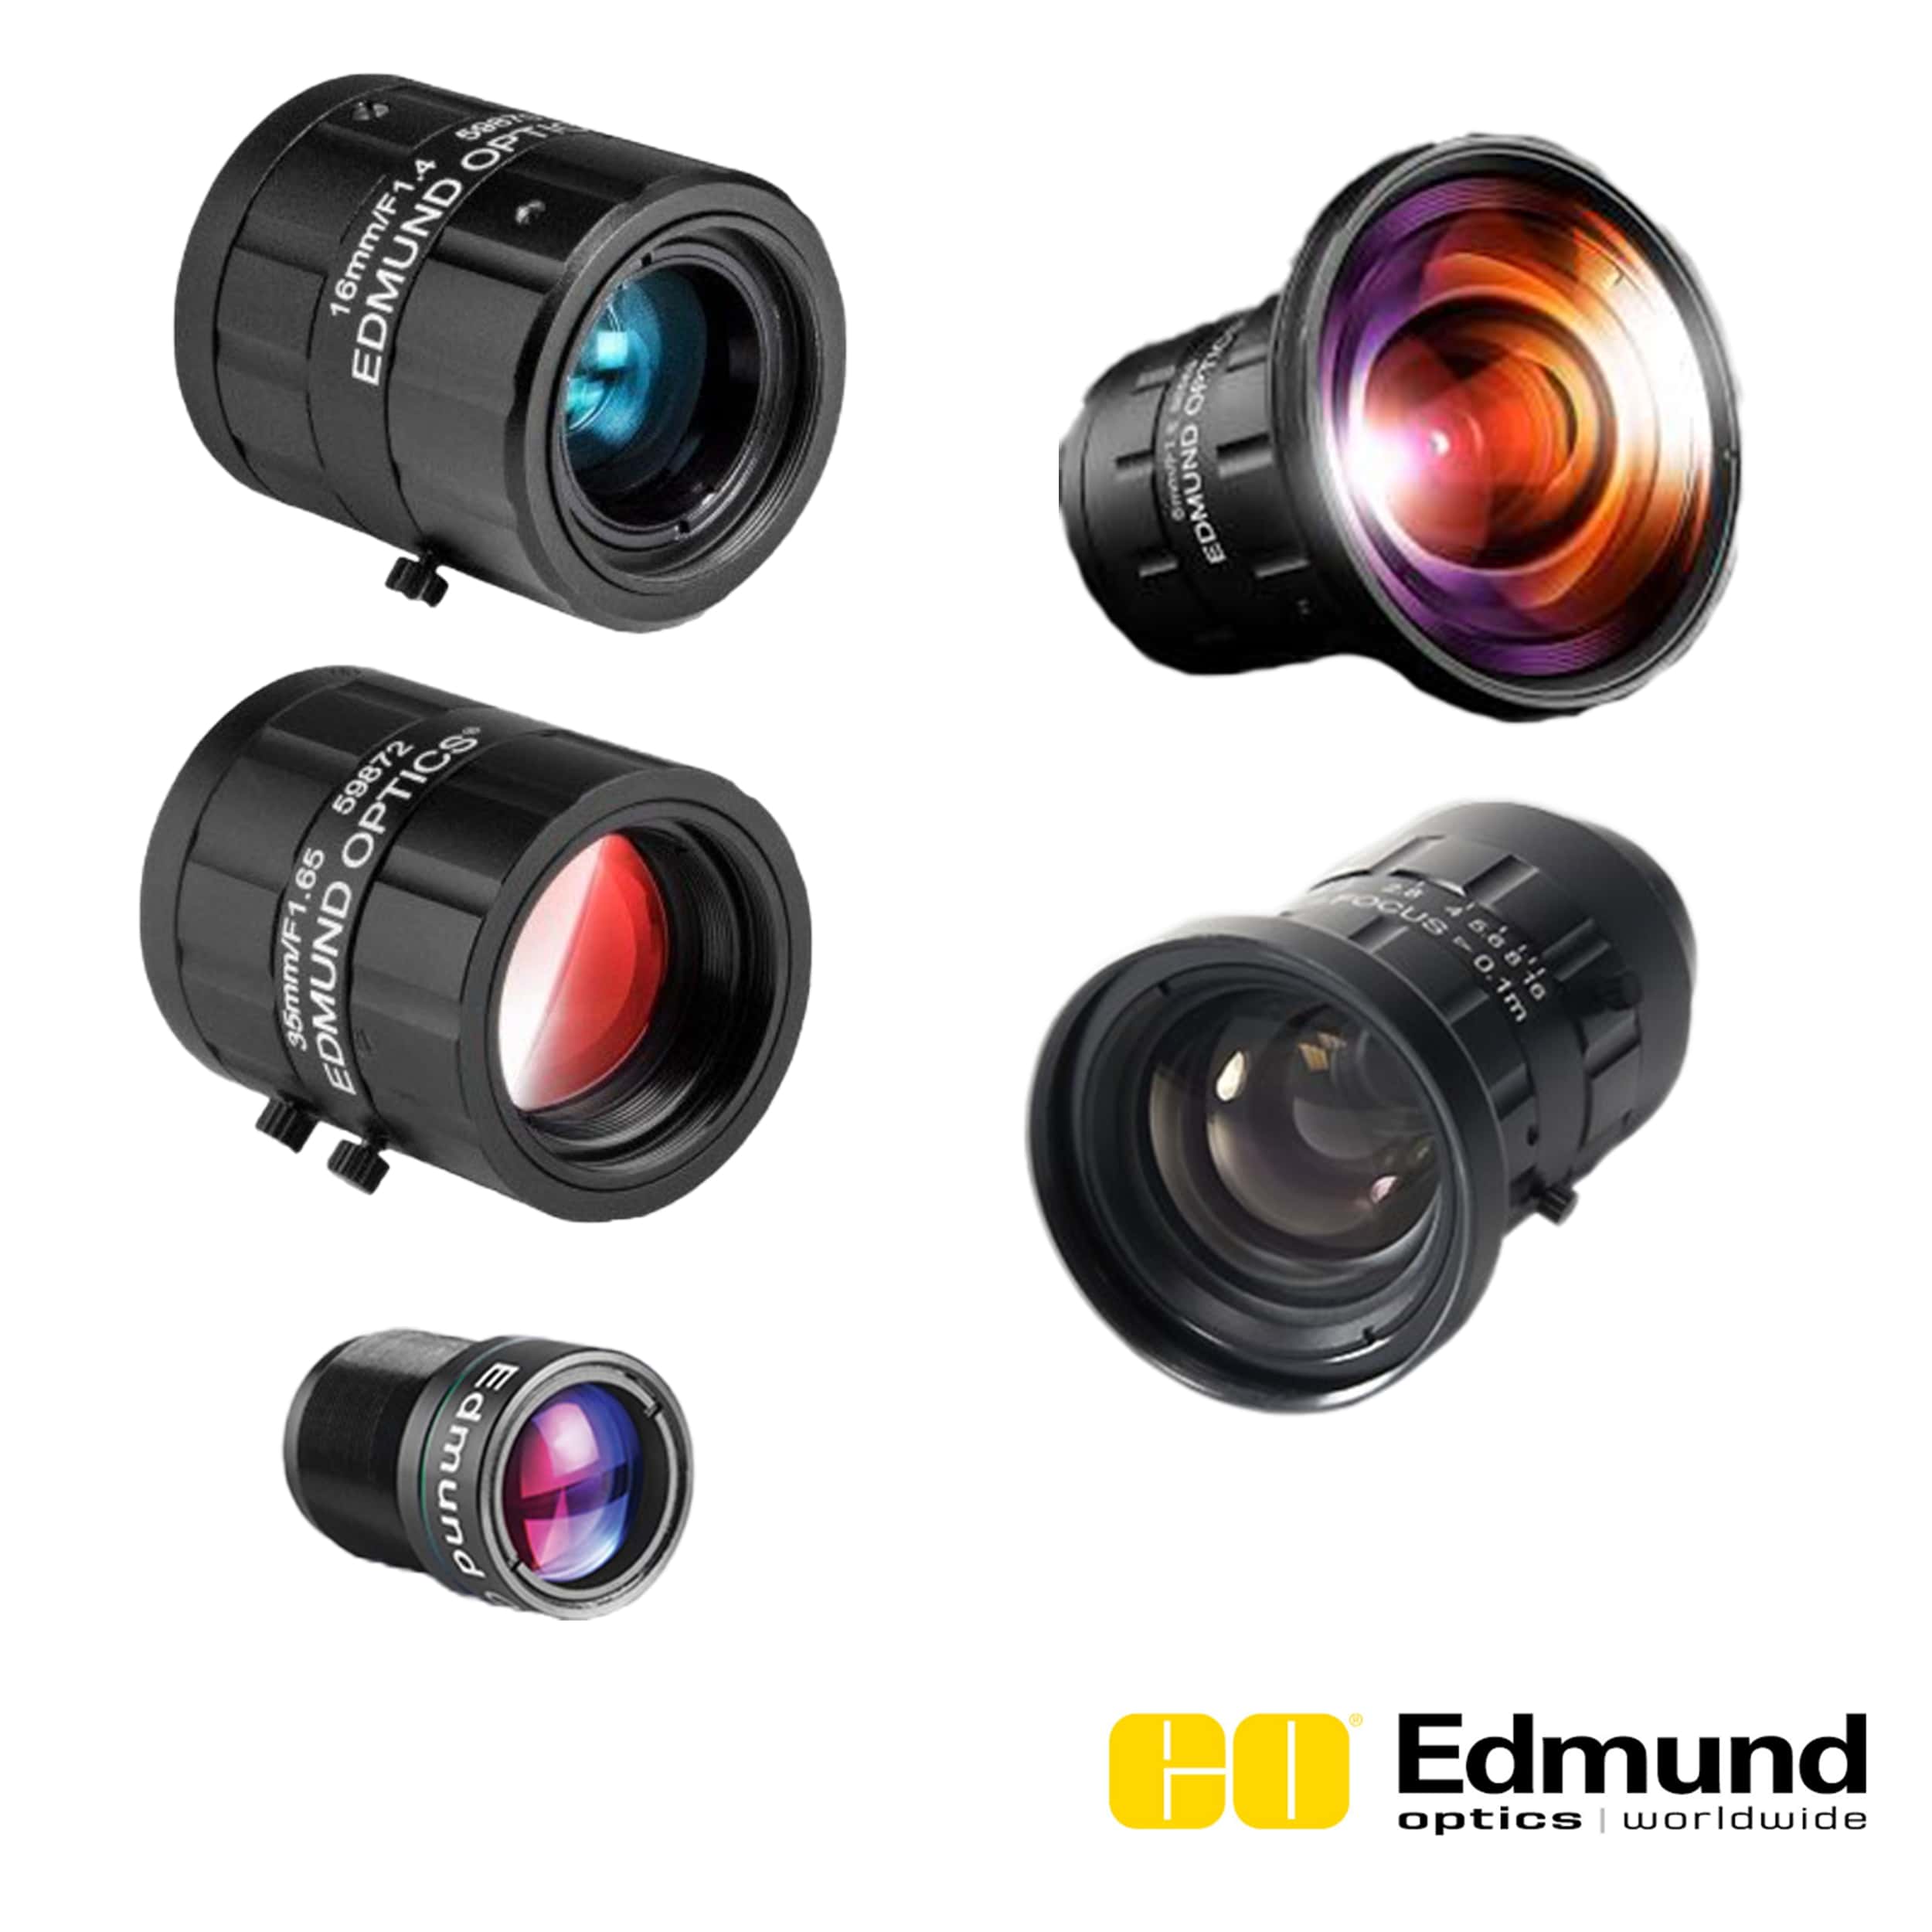 edmund-optics-brand